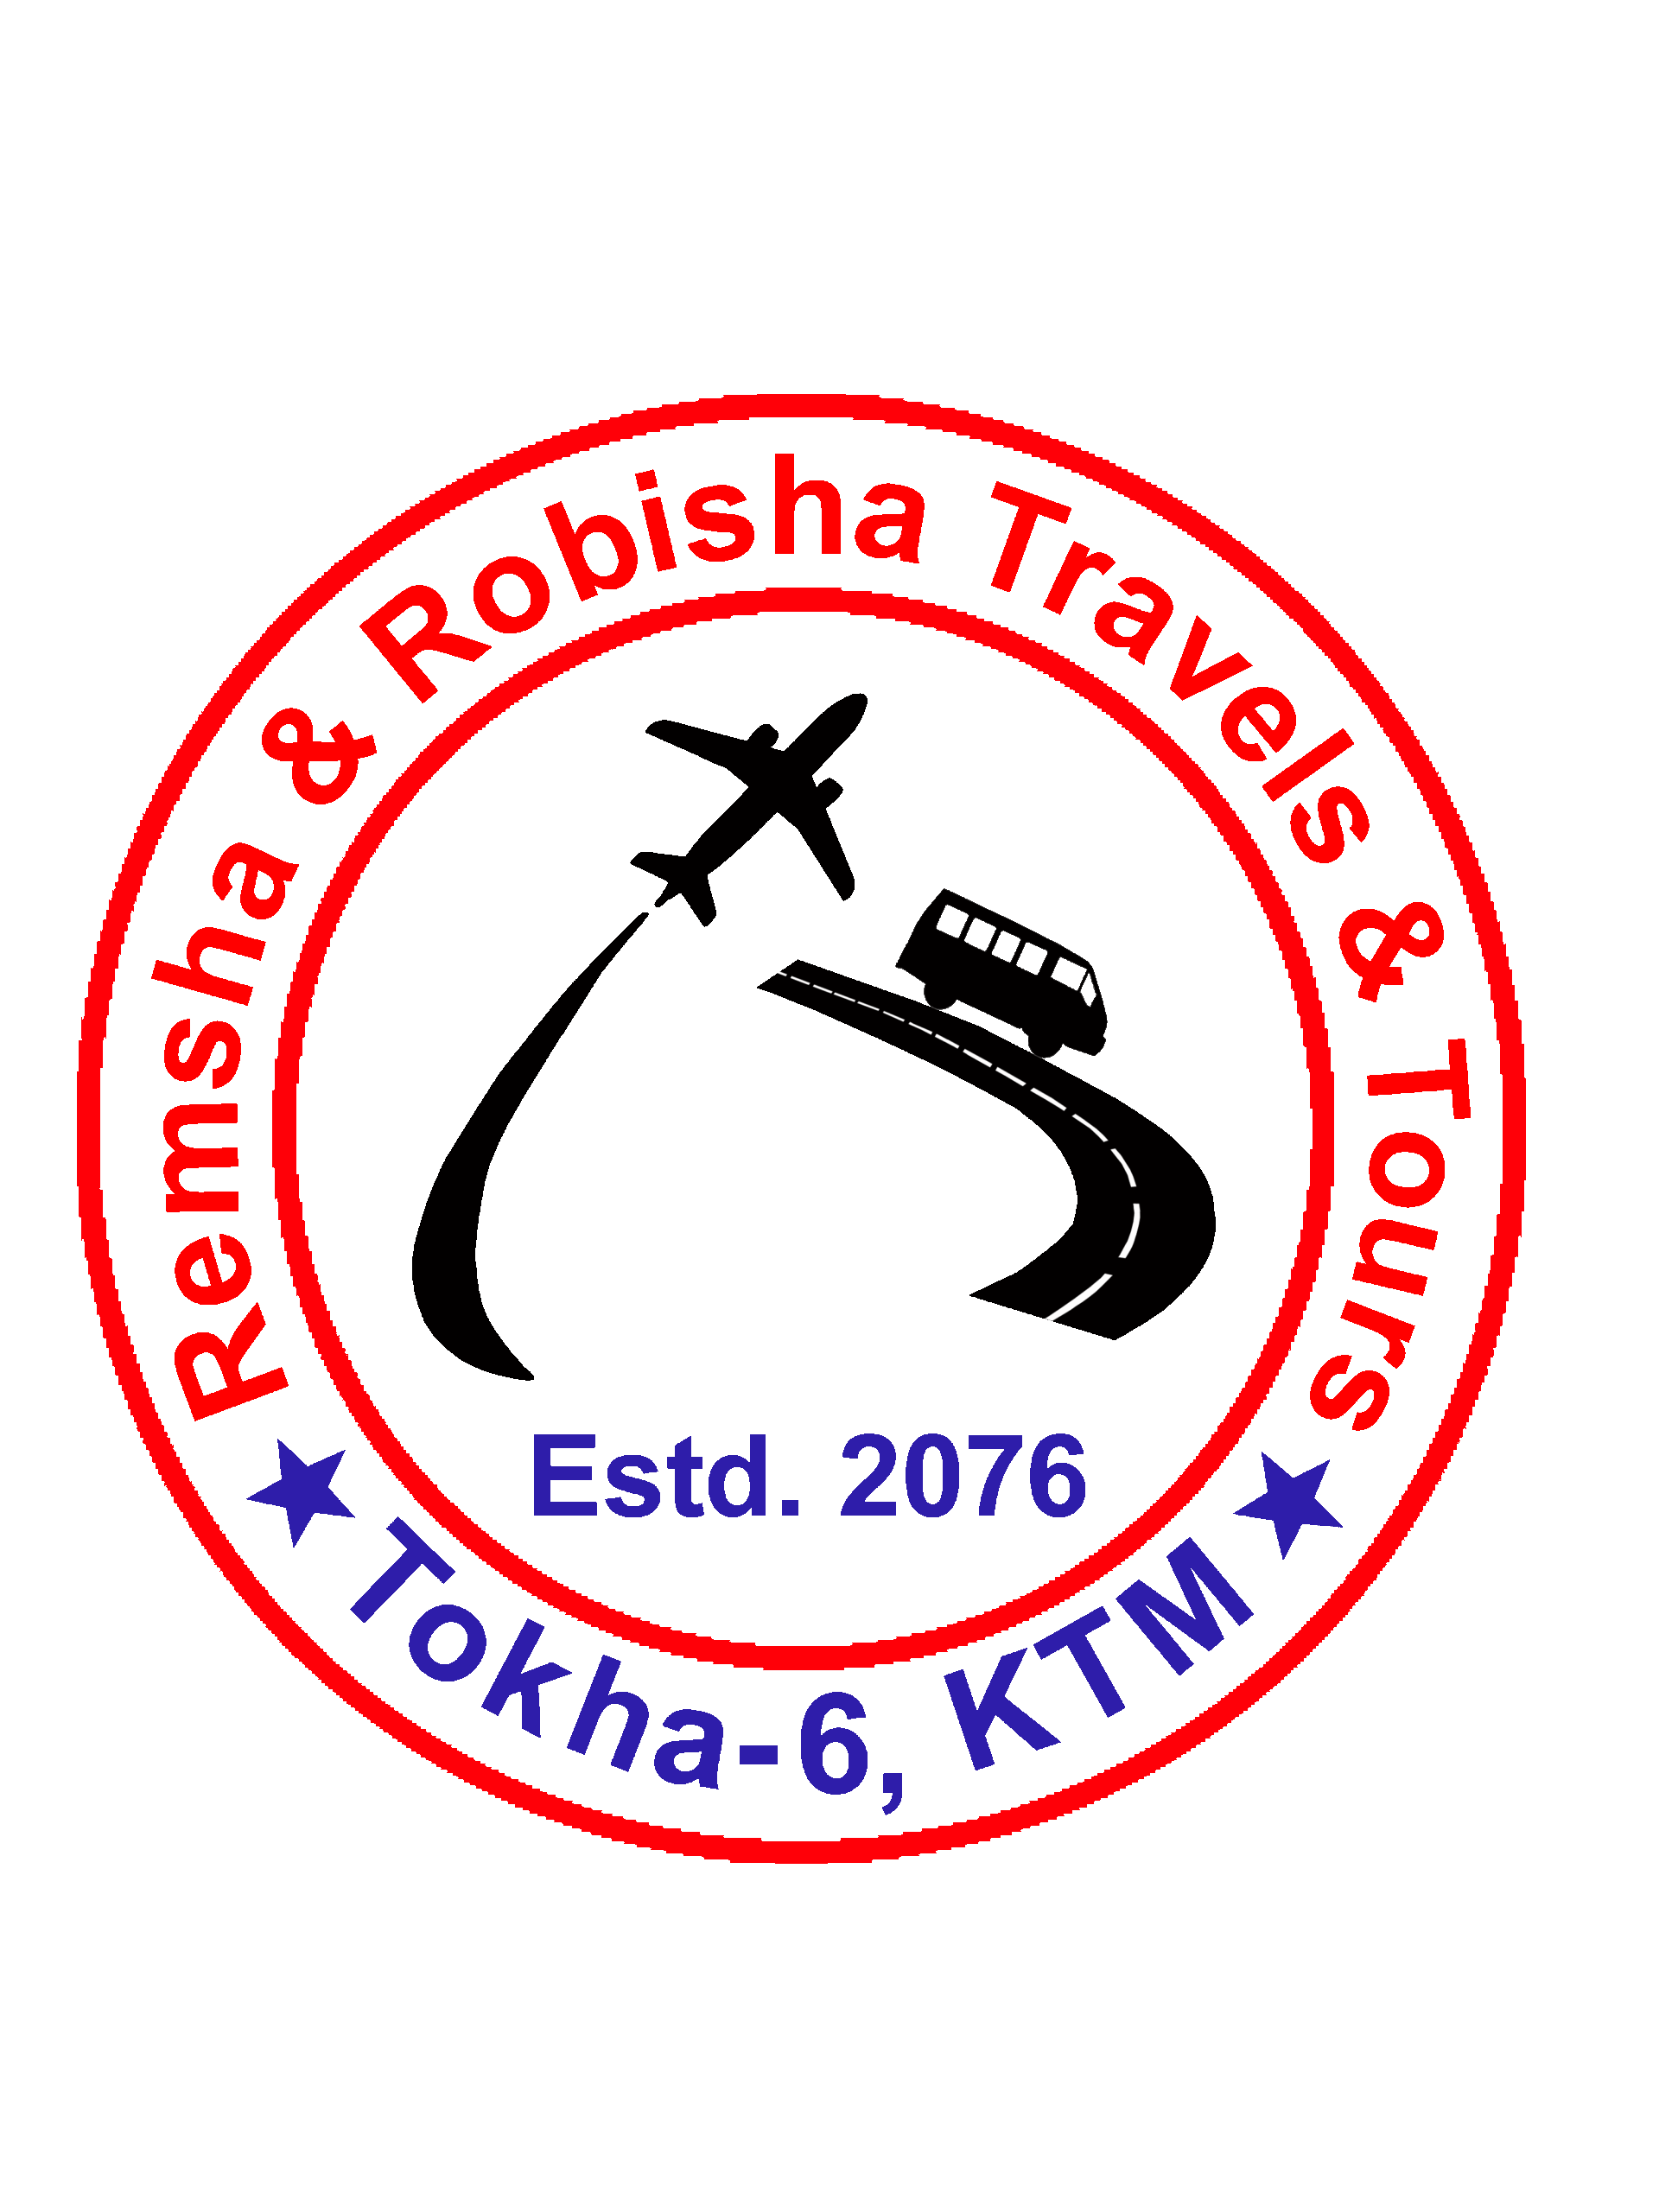 Remsha & Robisha Travel & Tours Nepal – Together with you we plan a ...